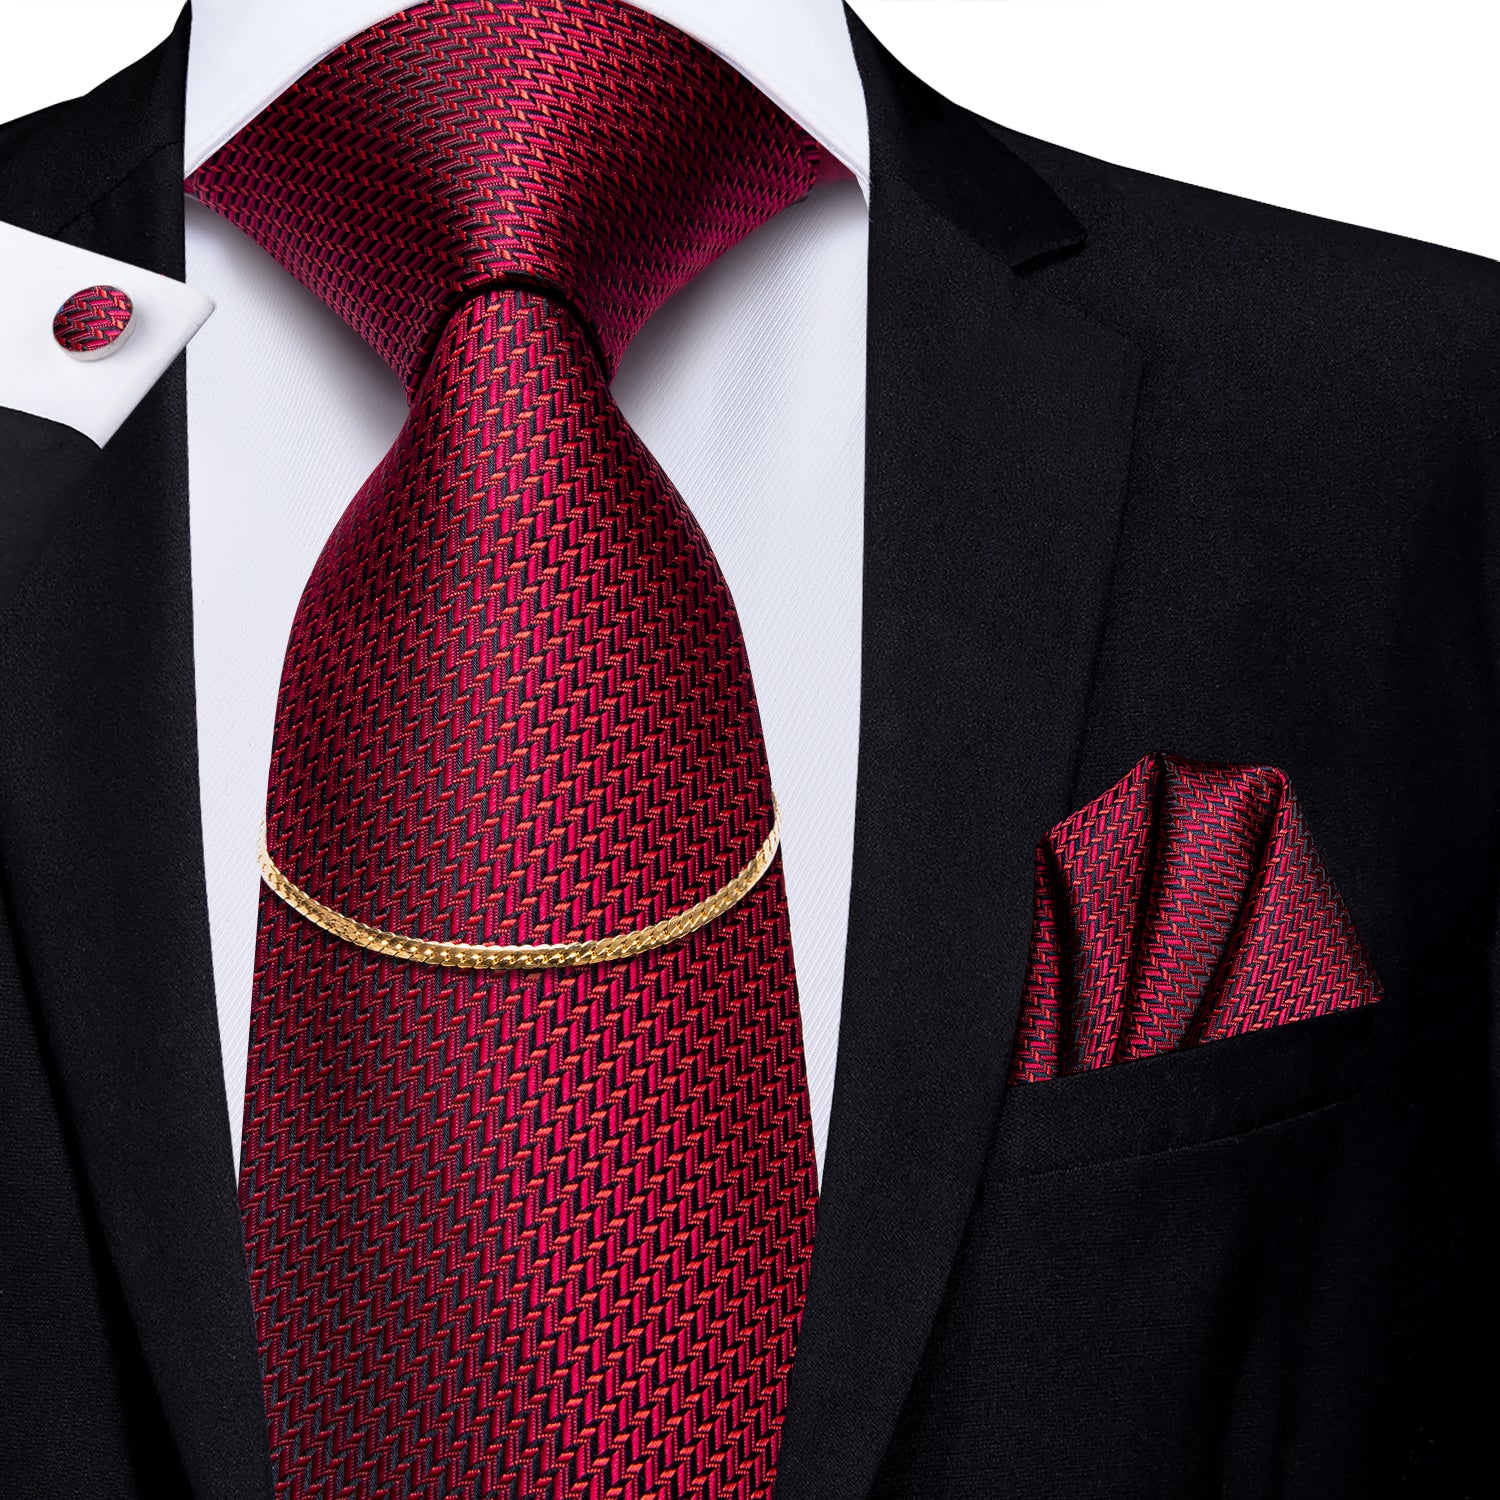 Pop Red Houndstooth Tie Pocket Square Cufflinks Set With Golden Chain